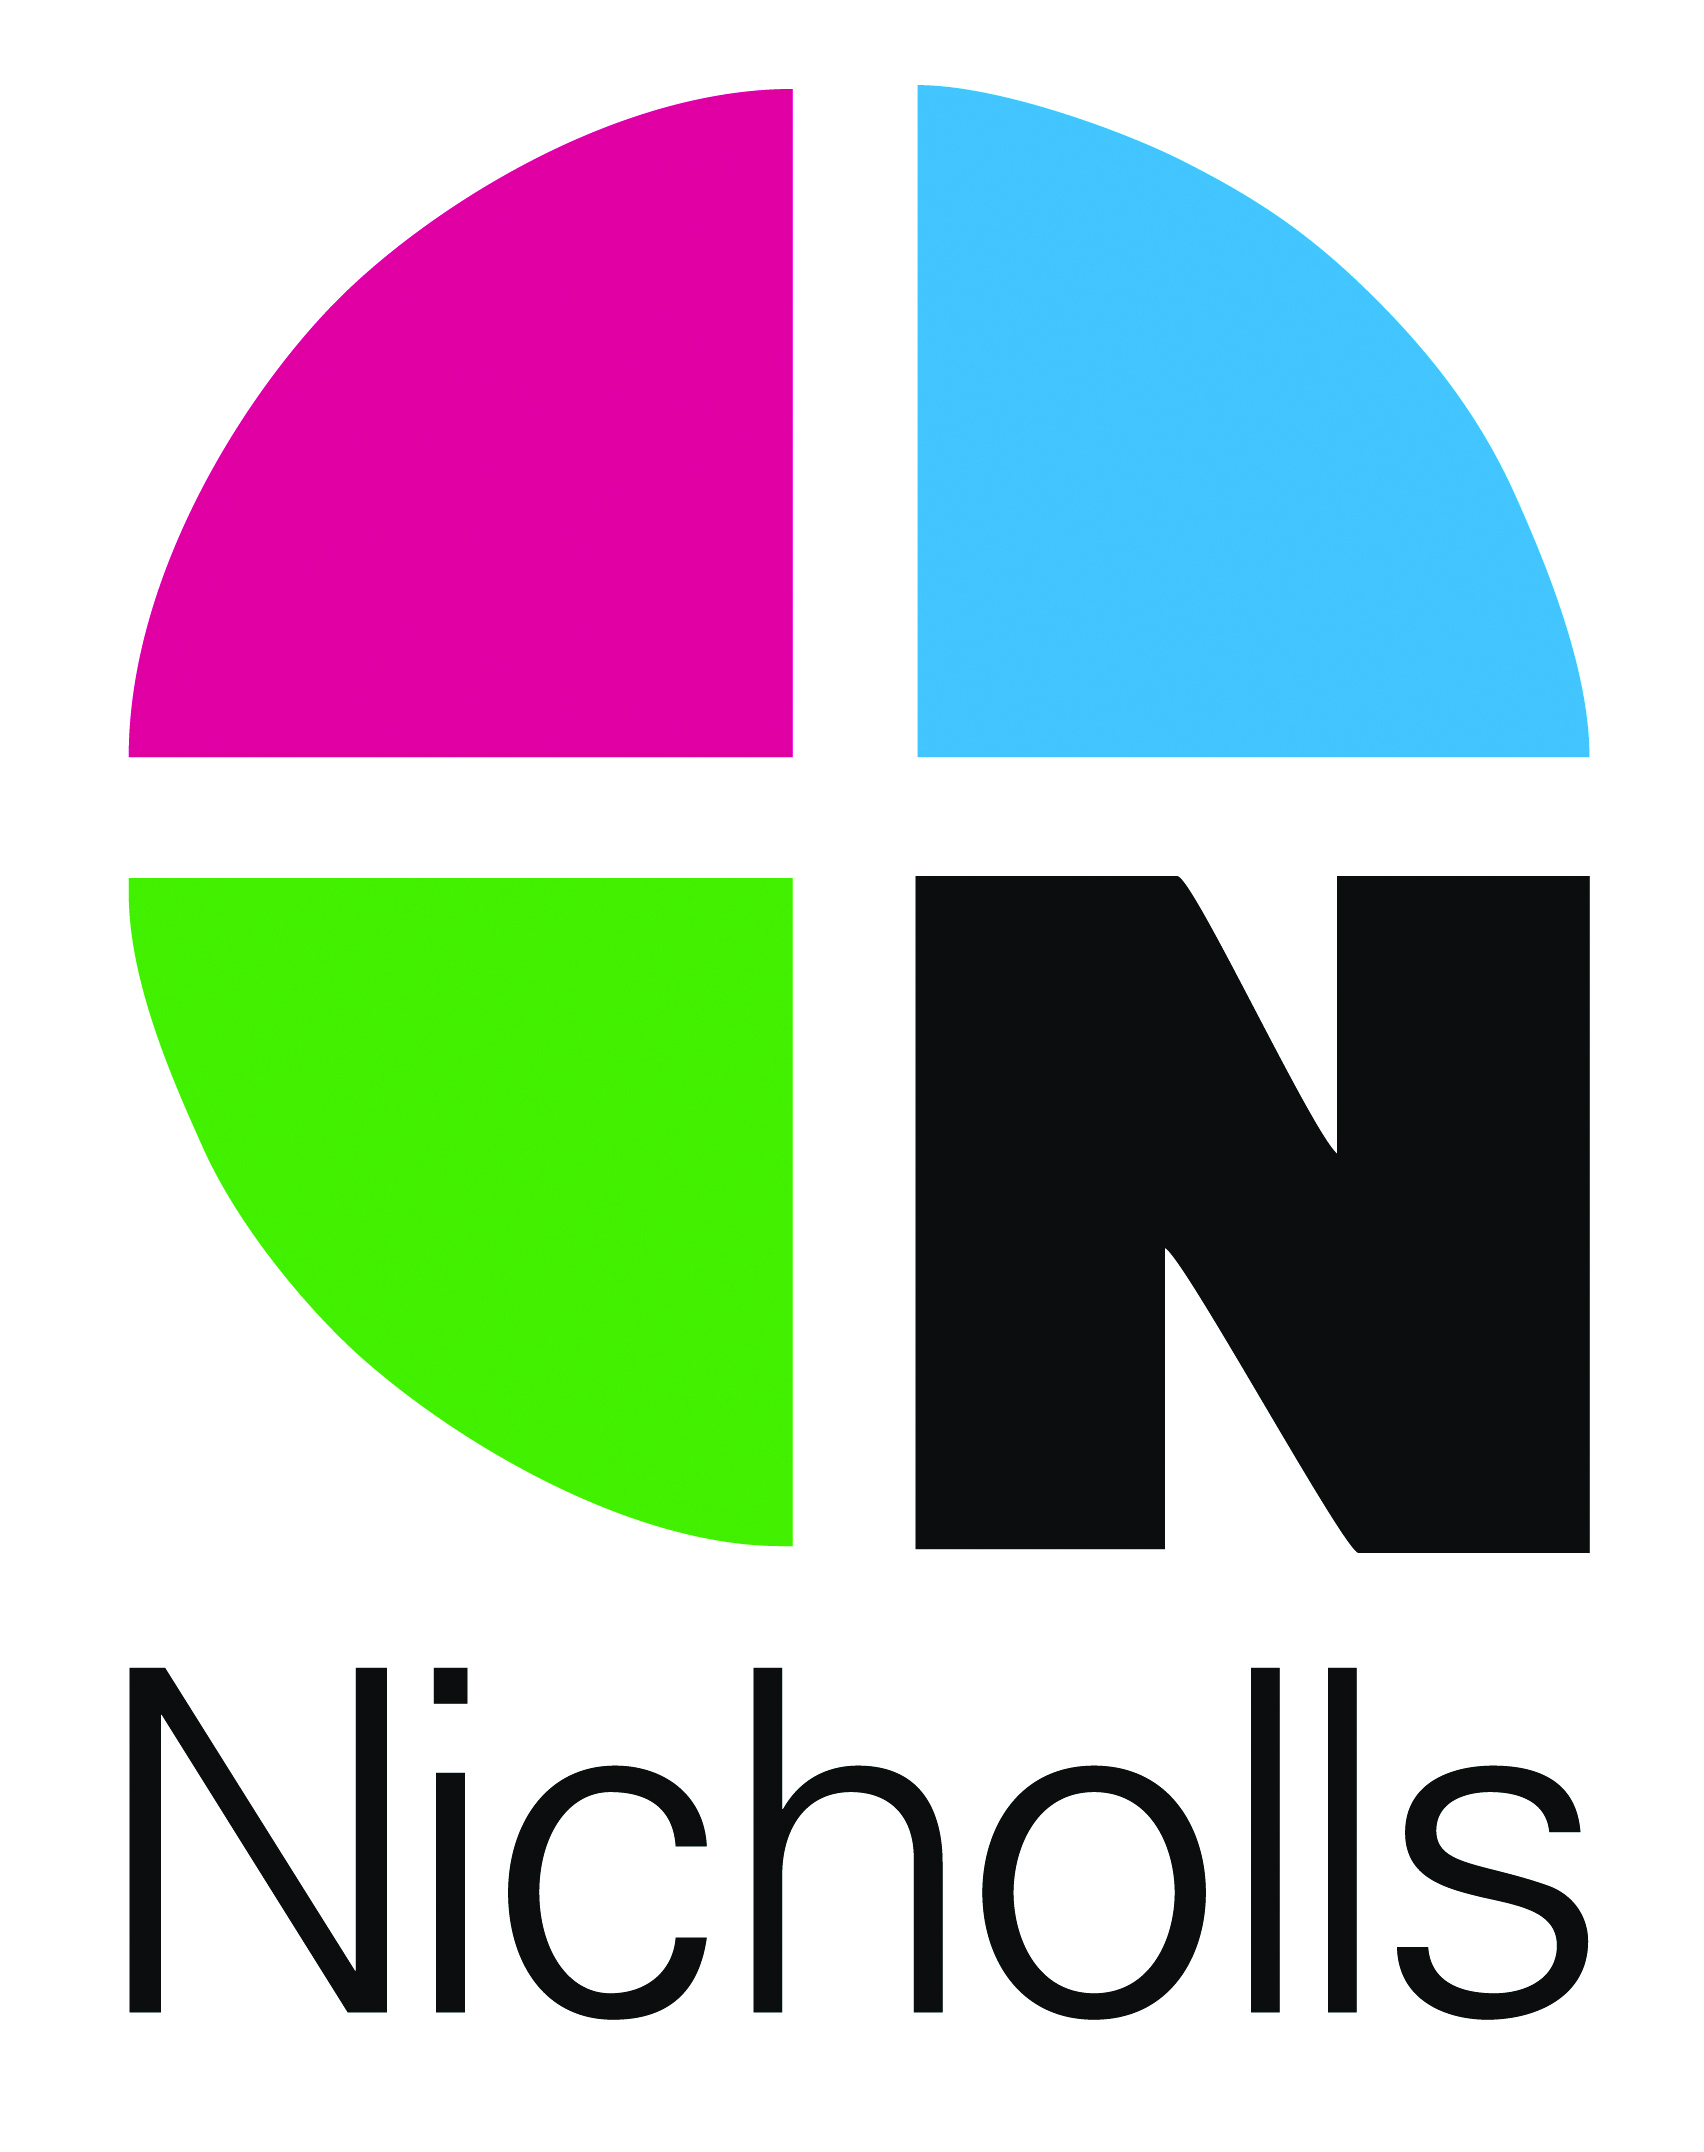 Nicholls-logo hi-res.jpg